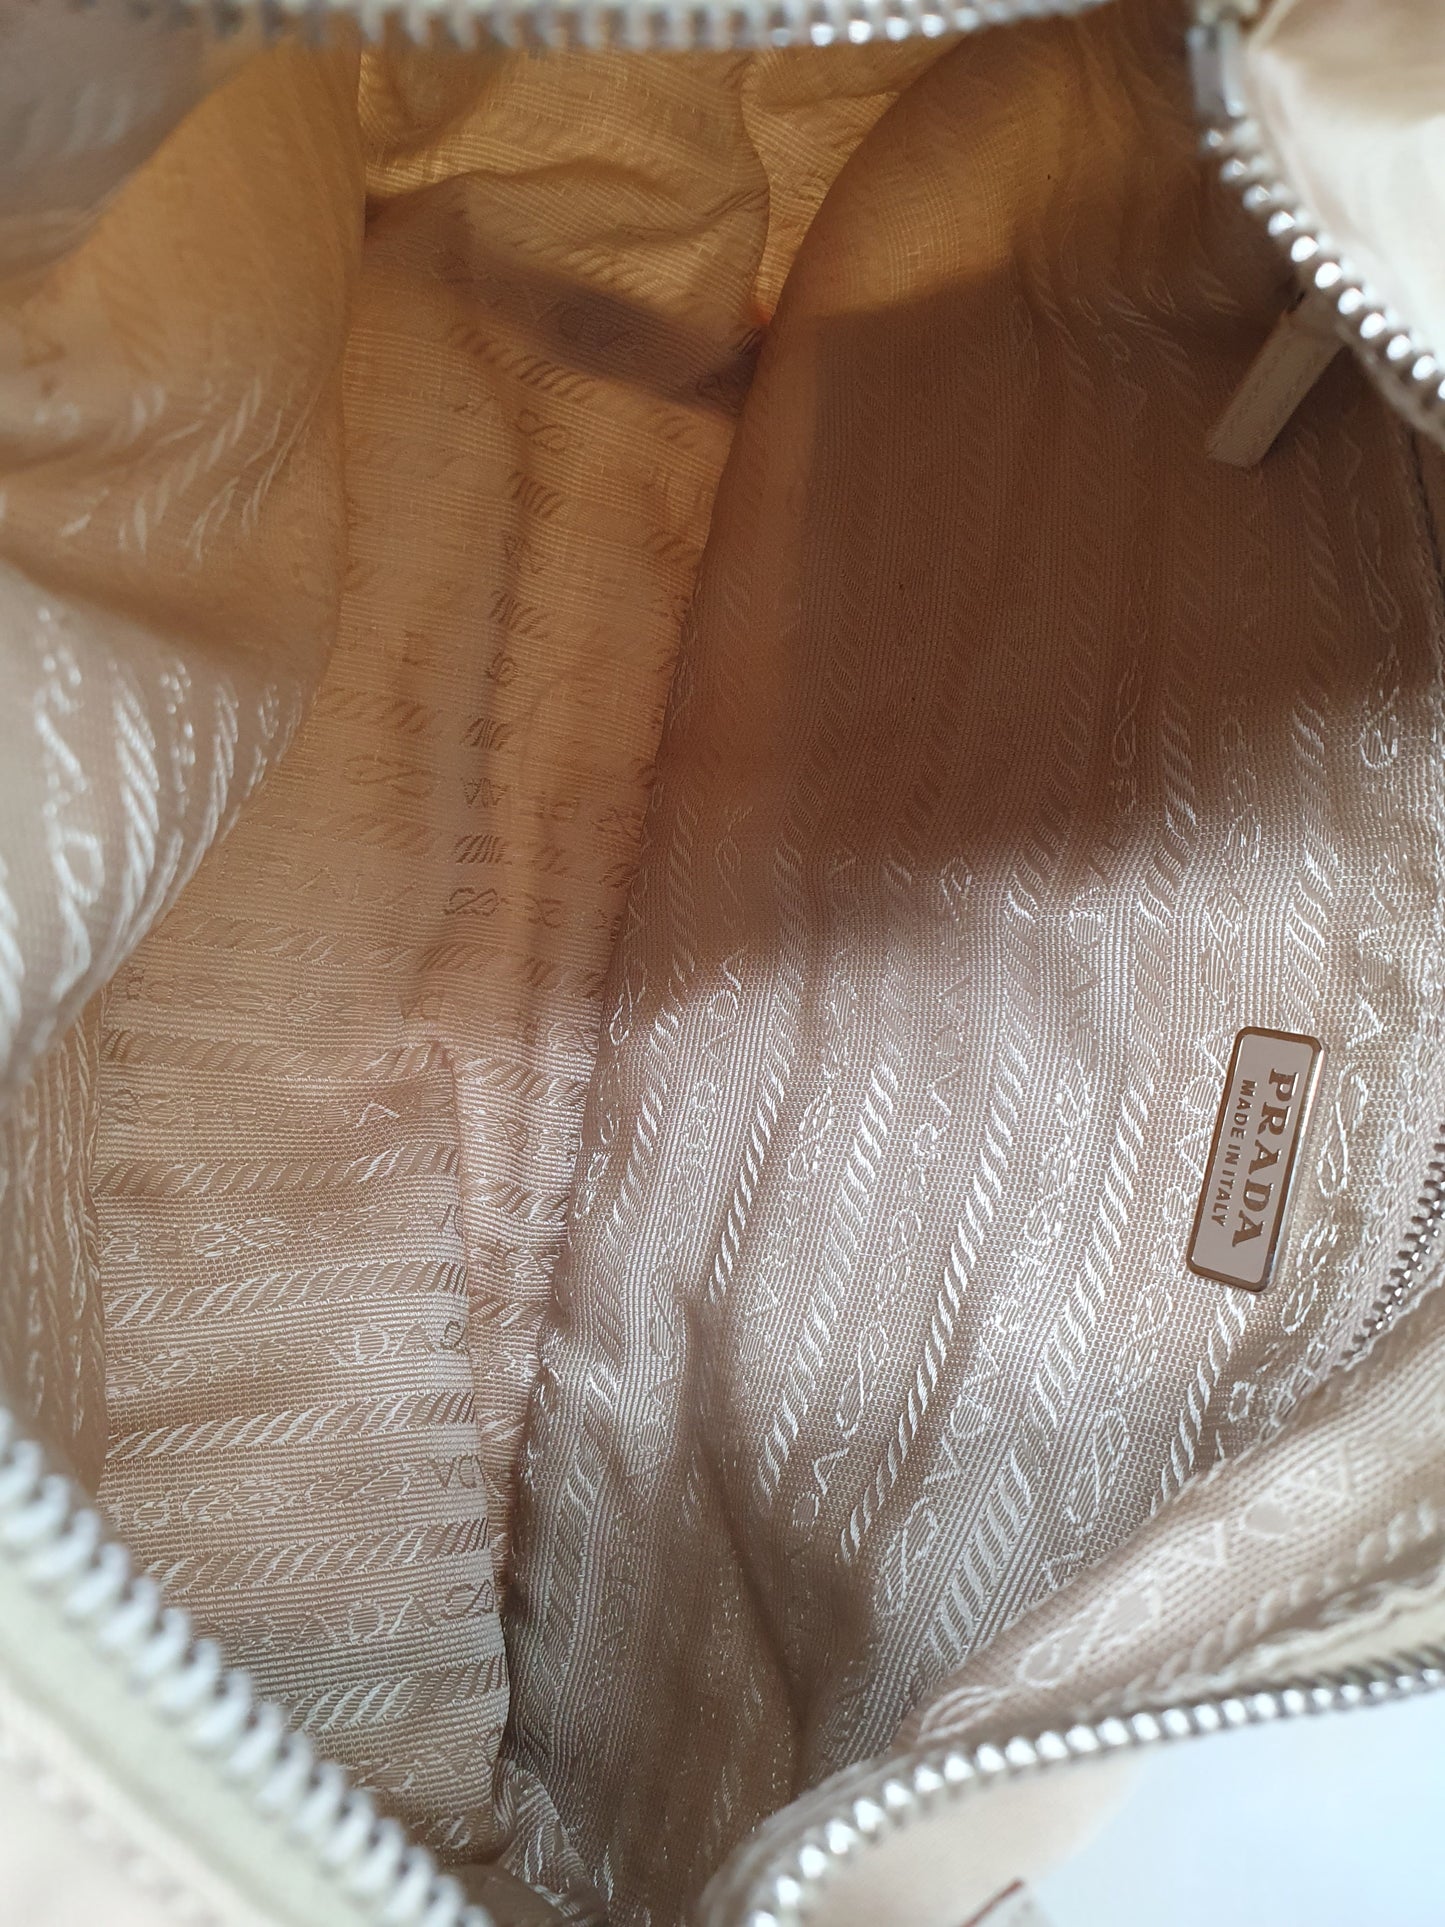 Prada re edition nylon shoulder bag